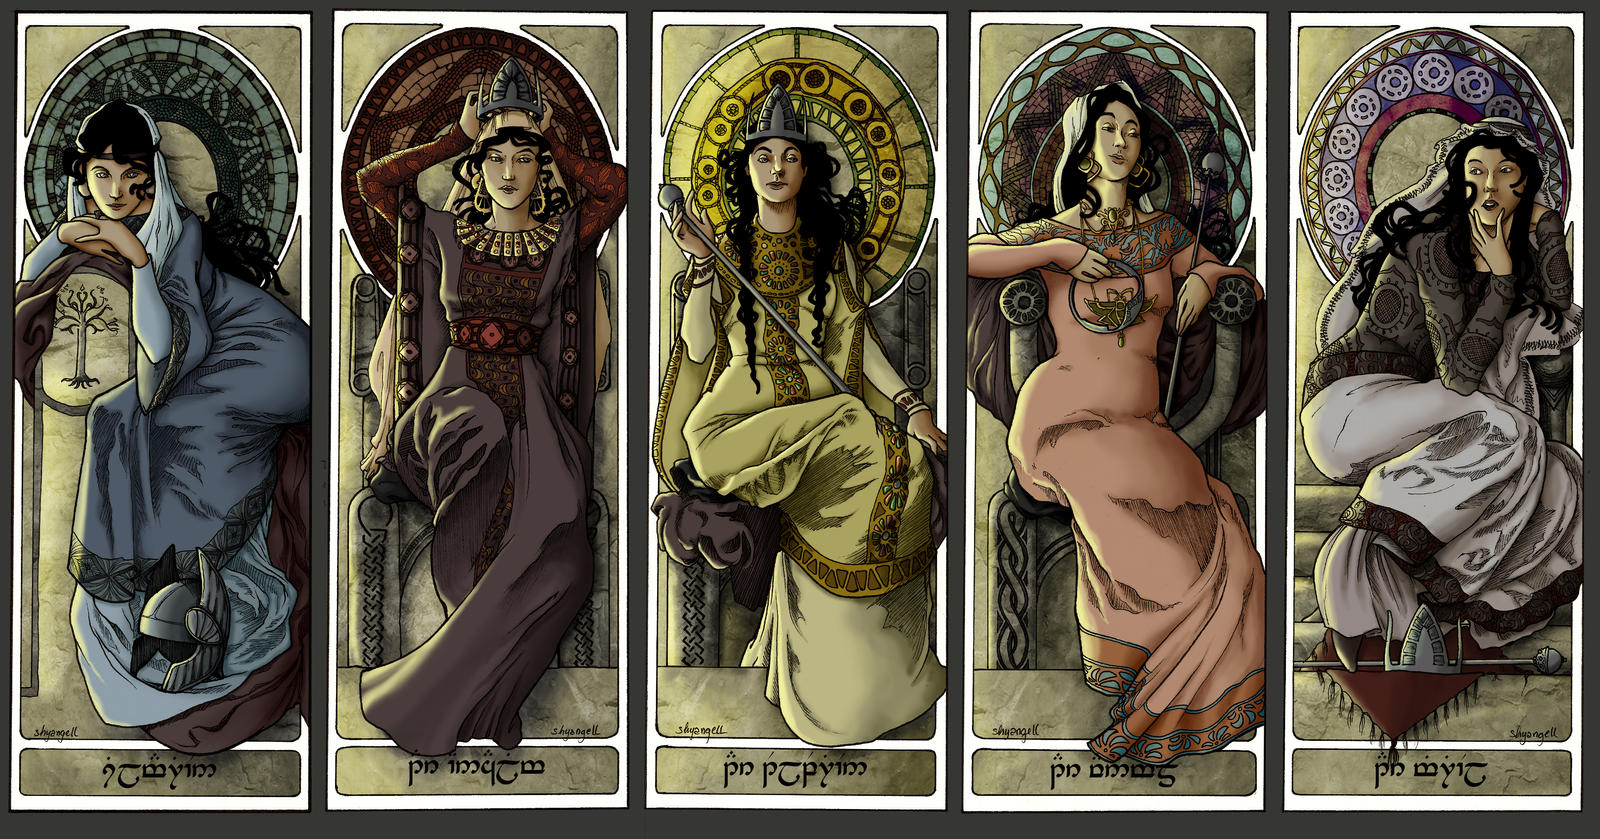 Recap: Queens of Numenor